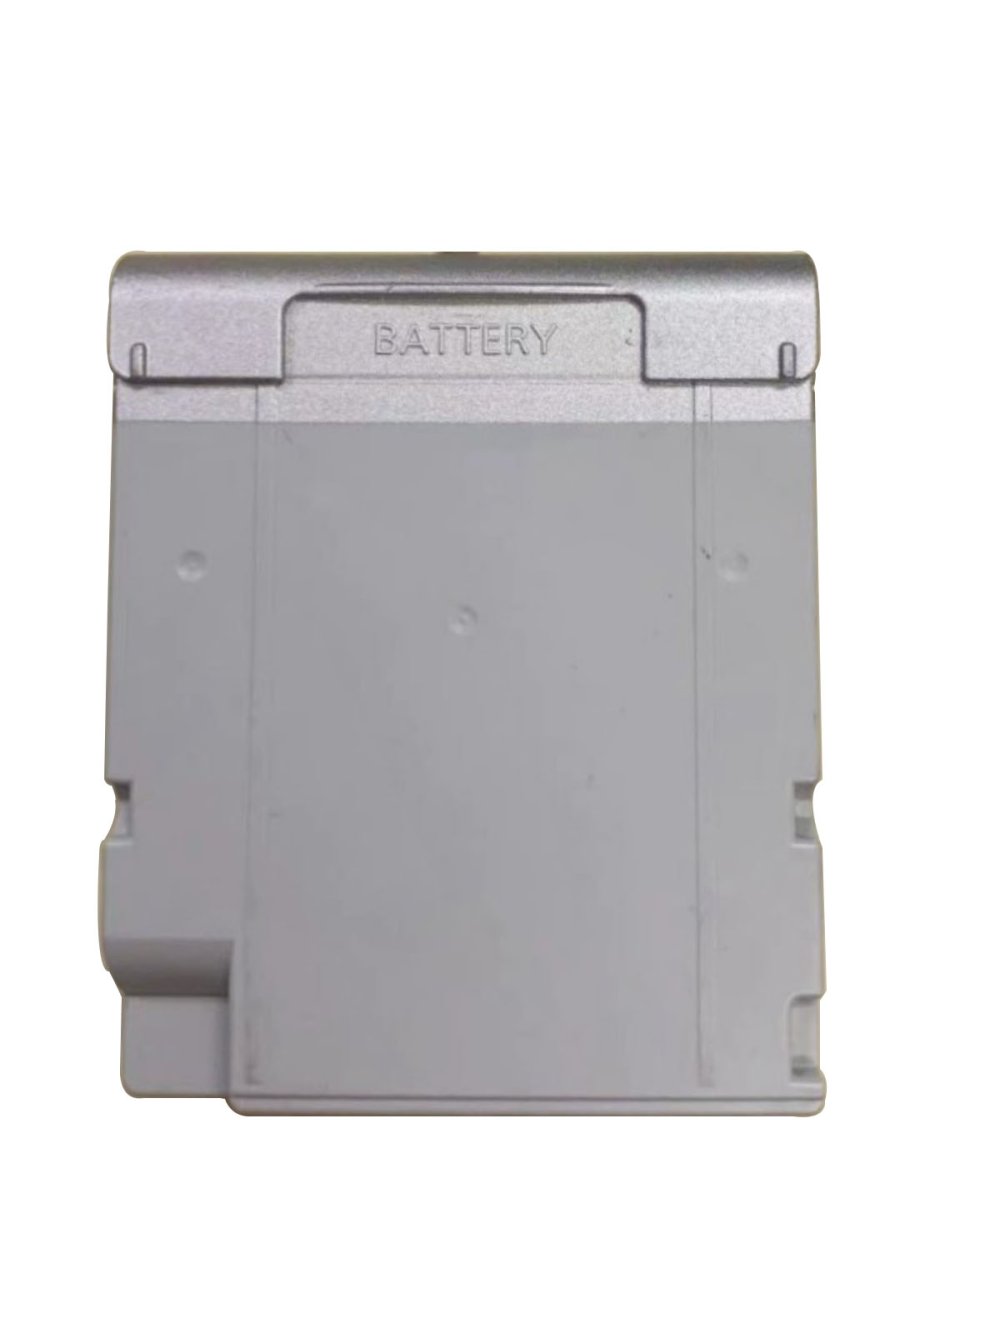 Origineel 43Wh Panasonic Toughbook CF-C1ADAGZ6M Accu Batterij